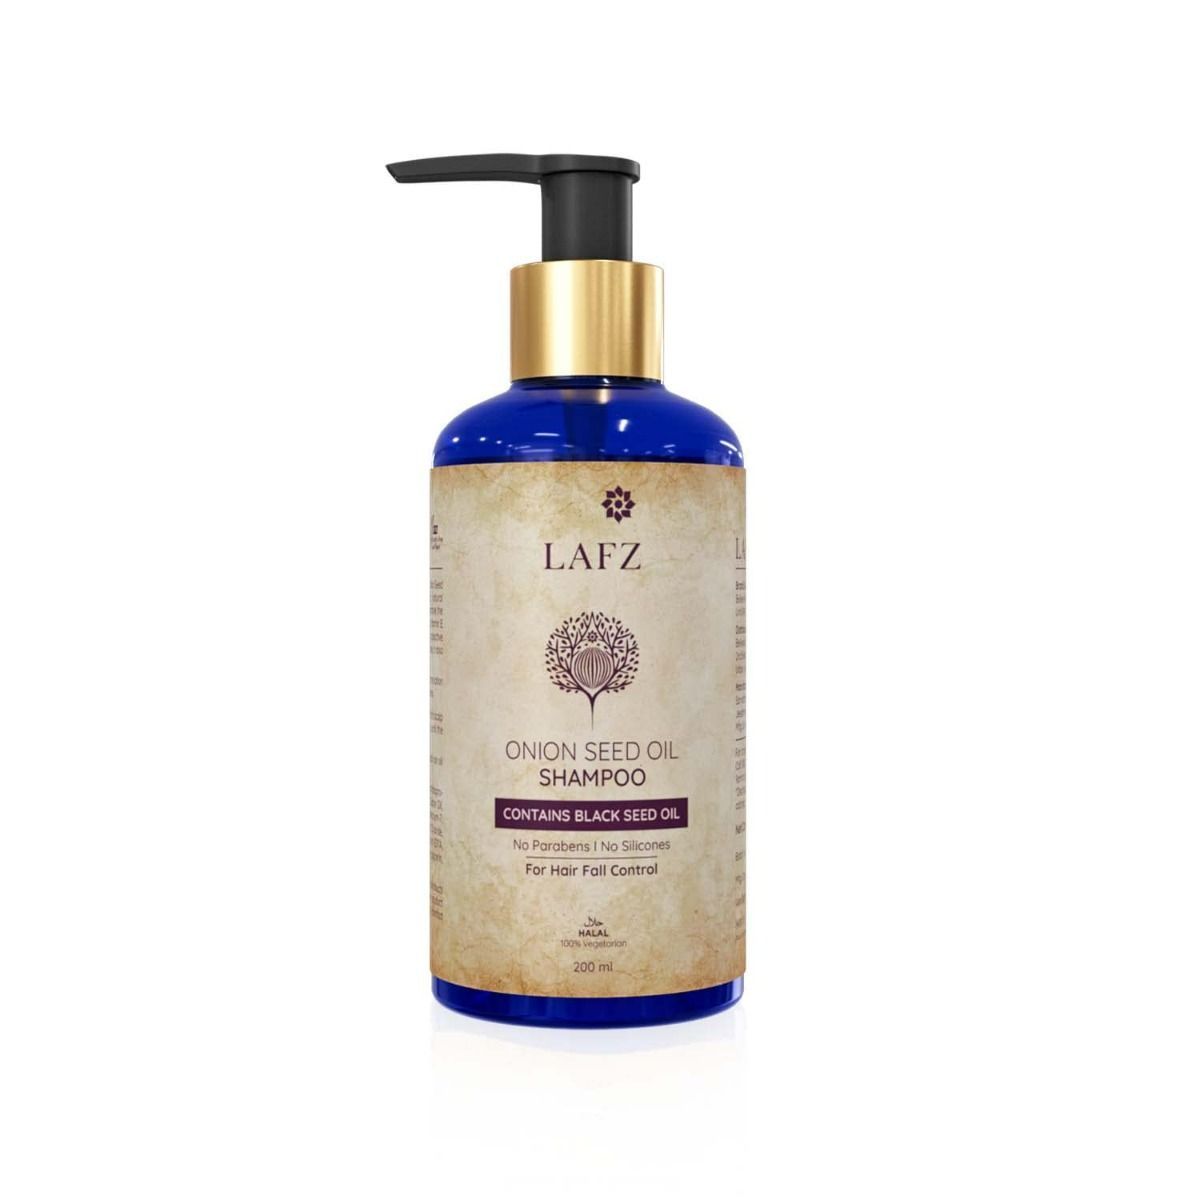 Lafz Onion Seed Oil Anti-hair fall Kit